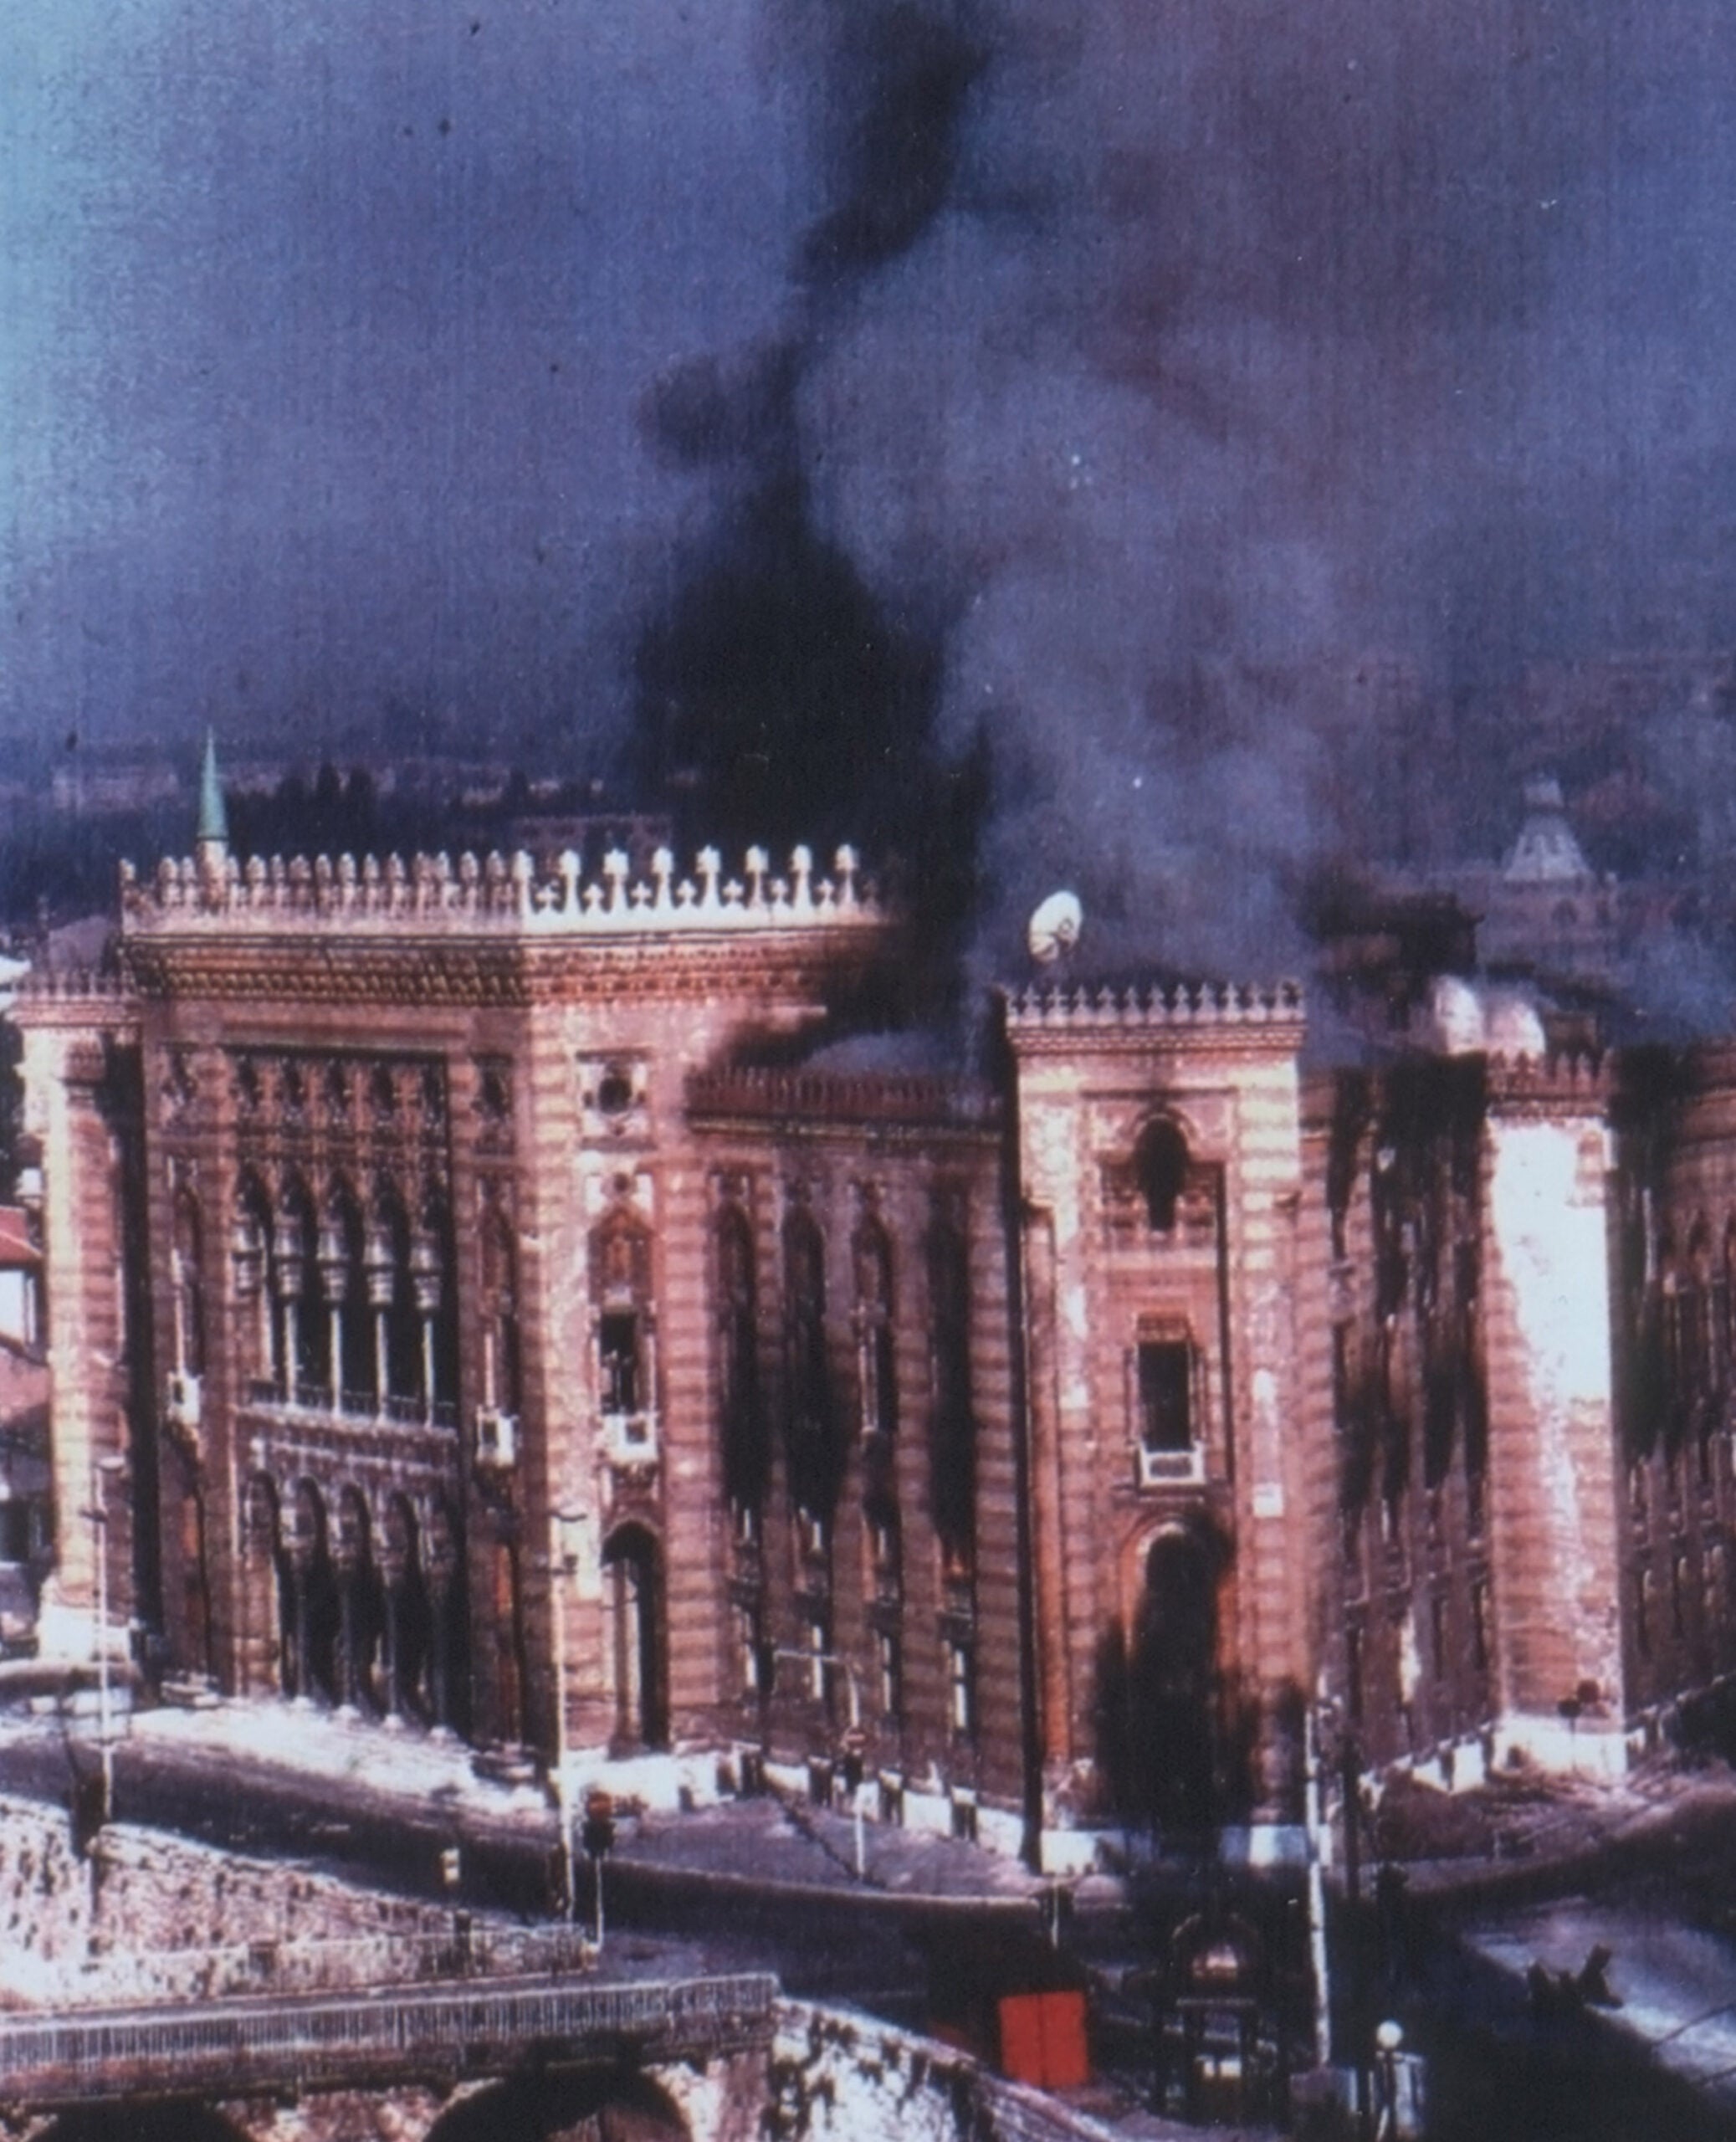 Burning library in Bosnia.